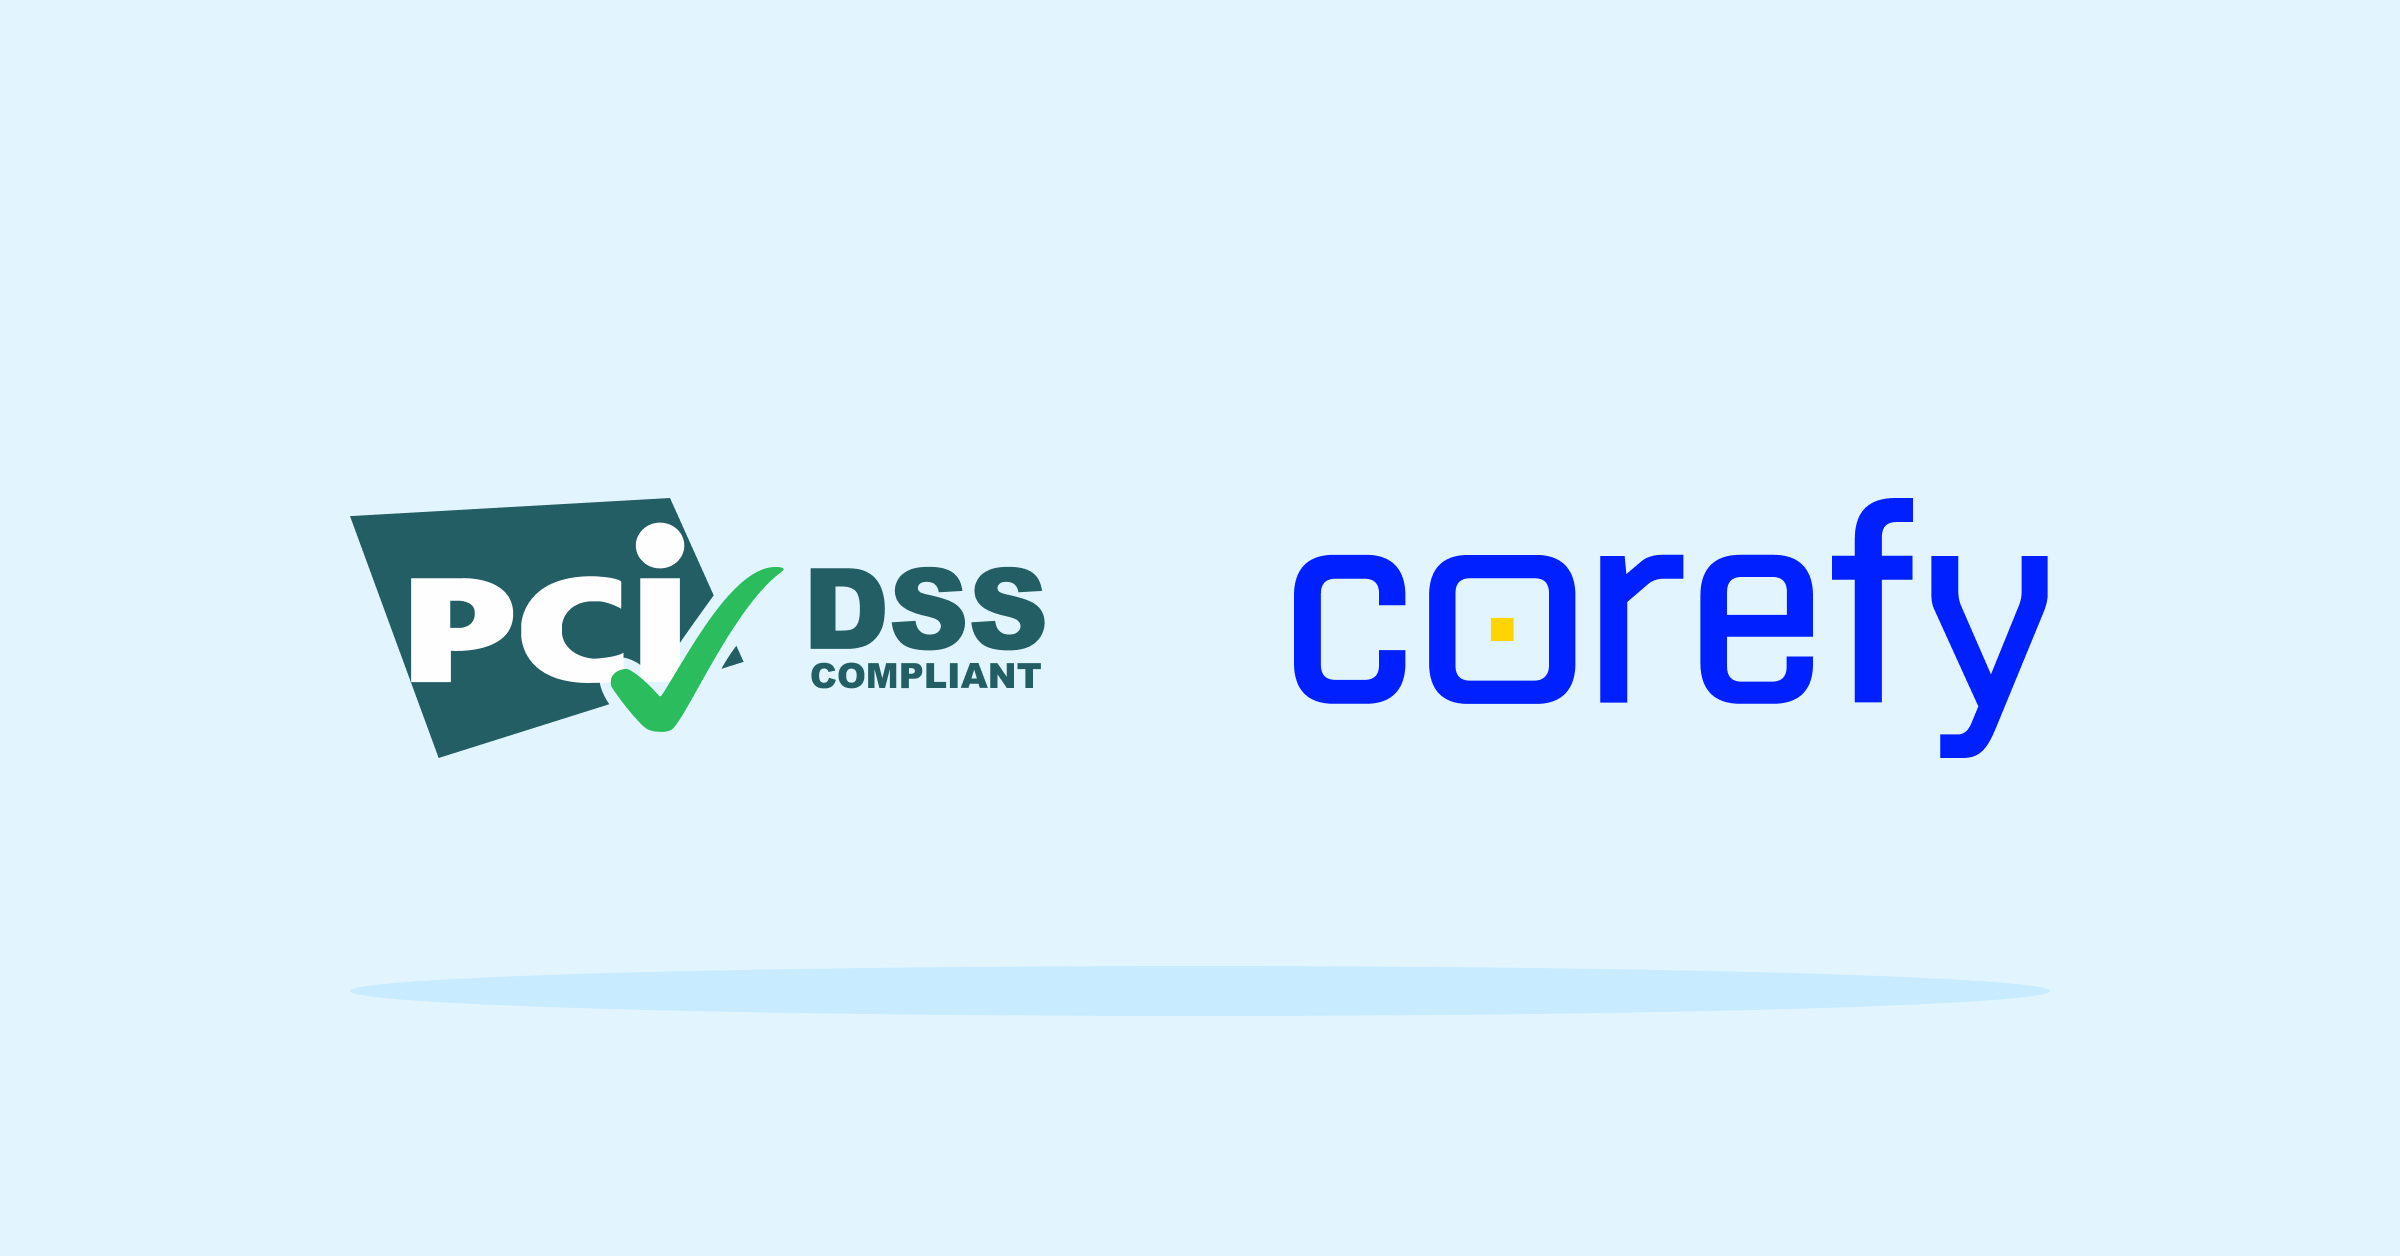 Corefy reaffirmed its PCI DSS compliance